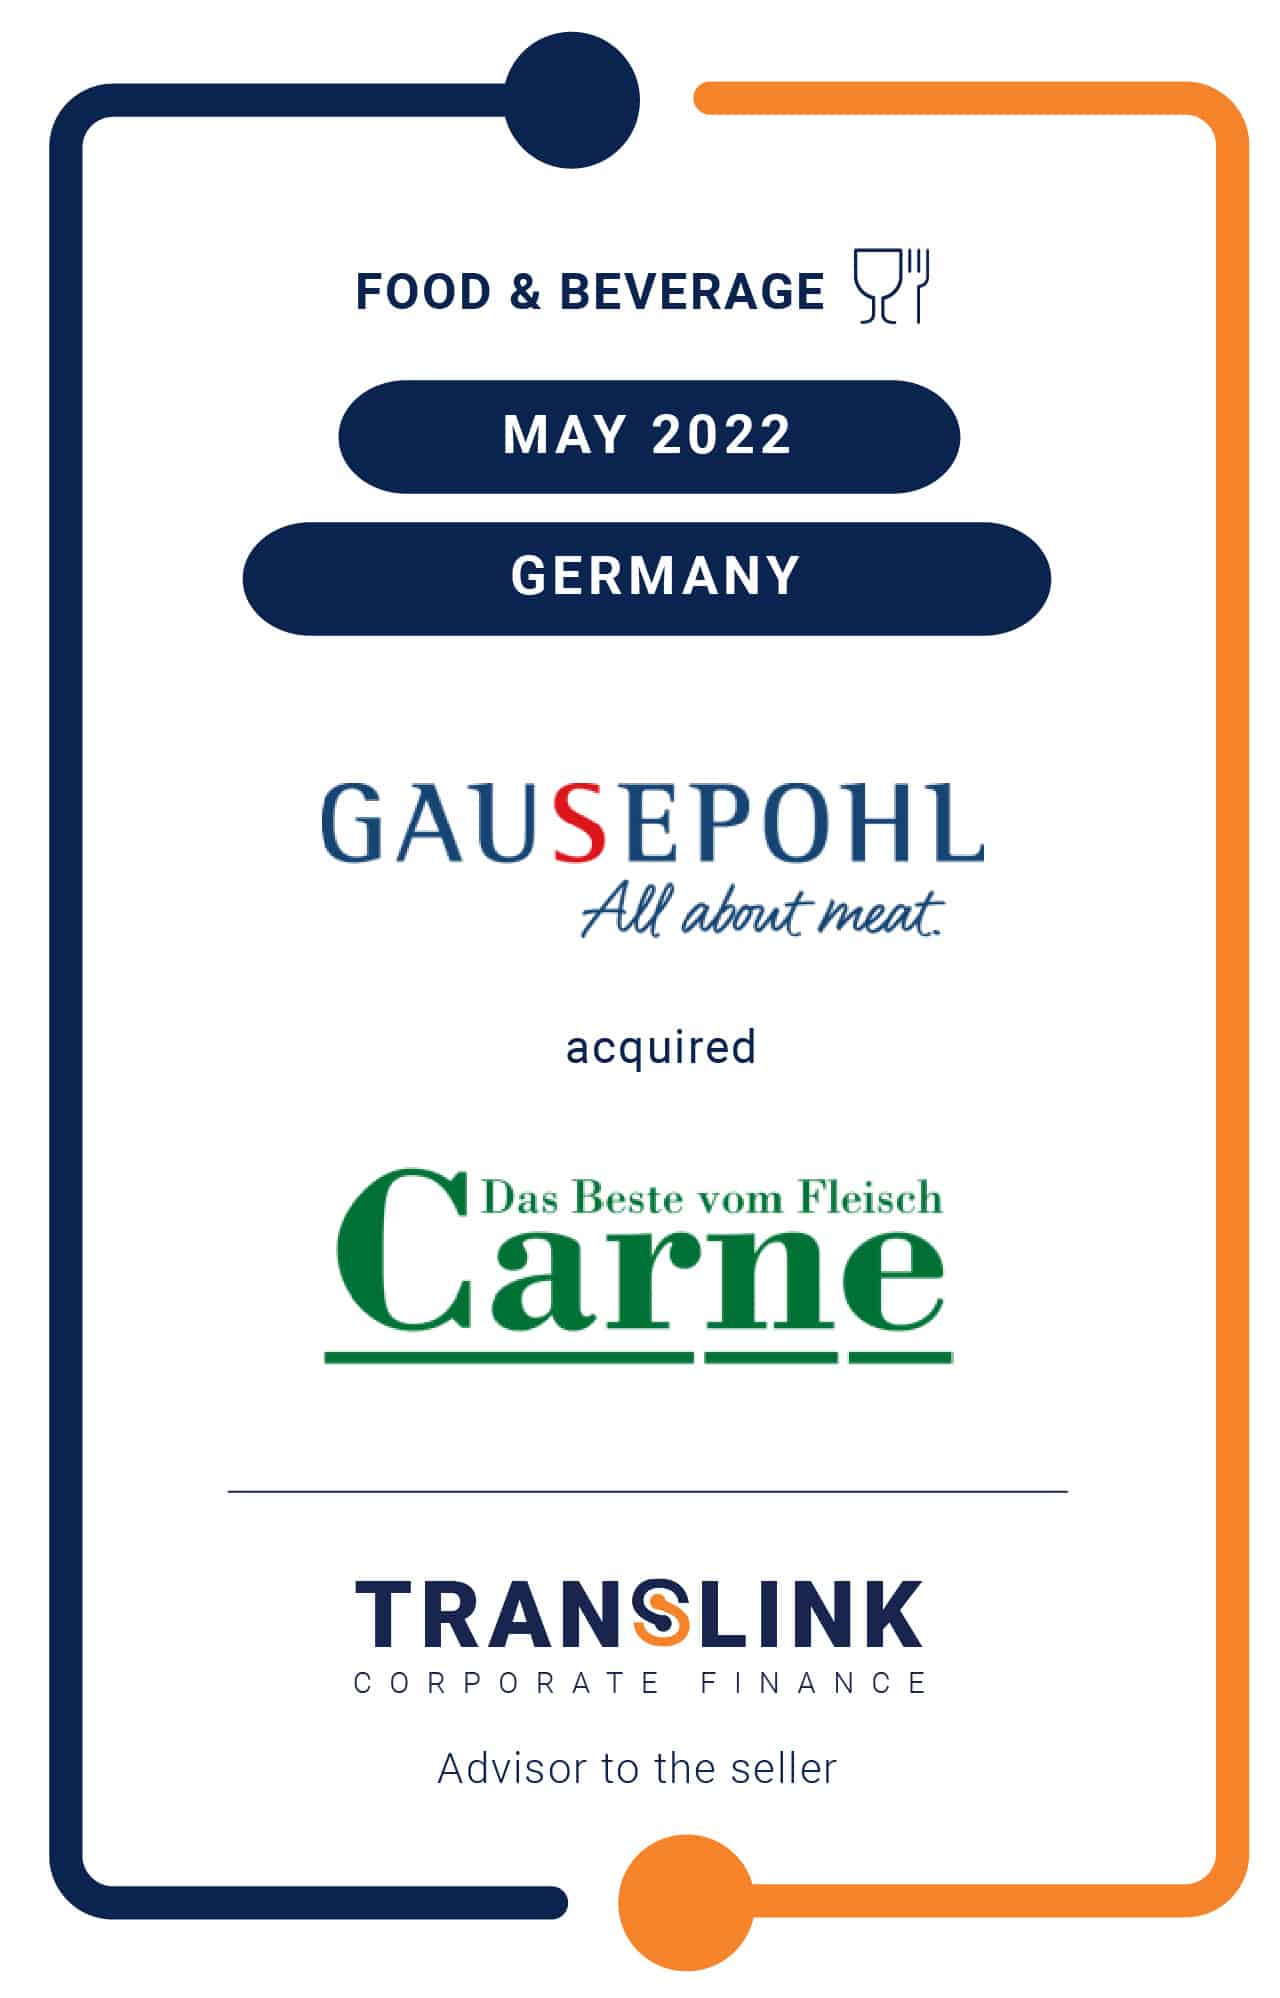 Translink Advised Carne Fleischhandel GmbH On The Sale To Gausepohl Food GmbH